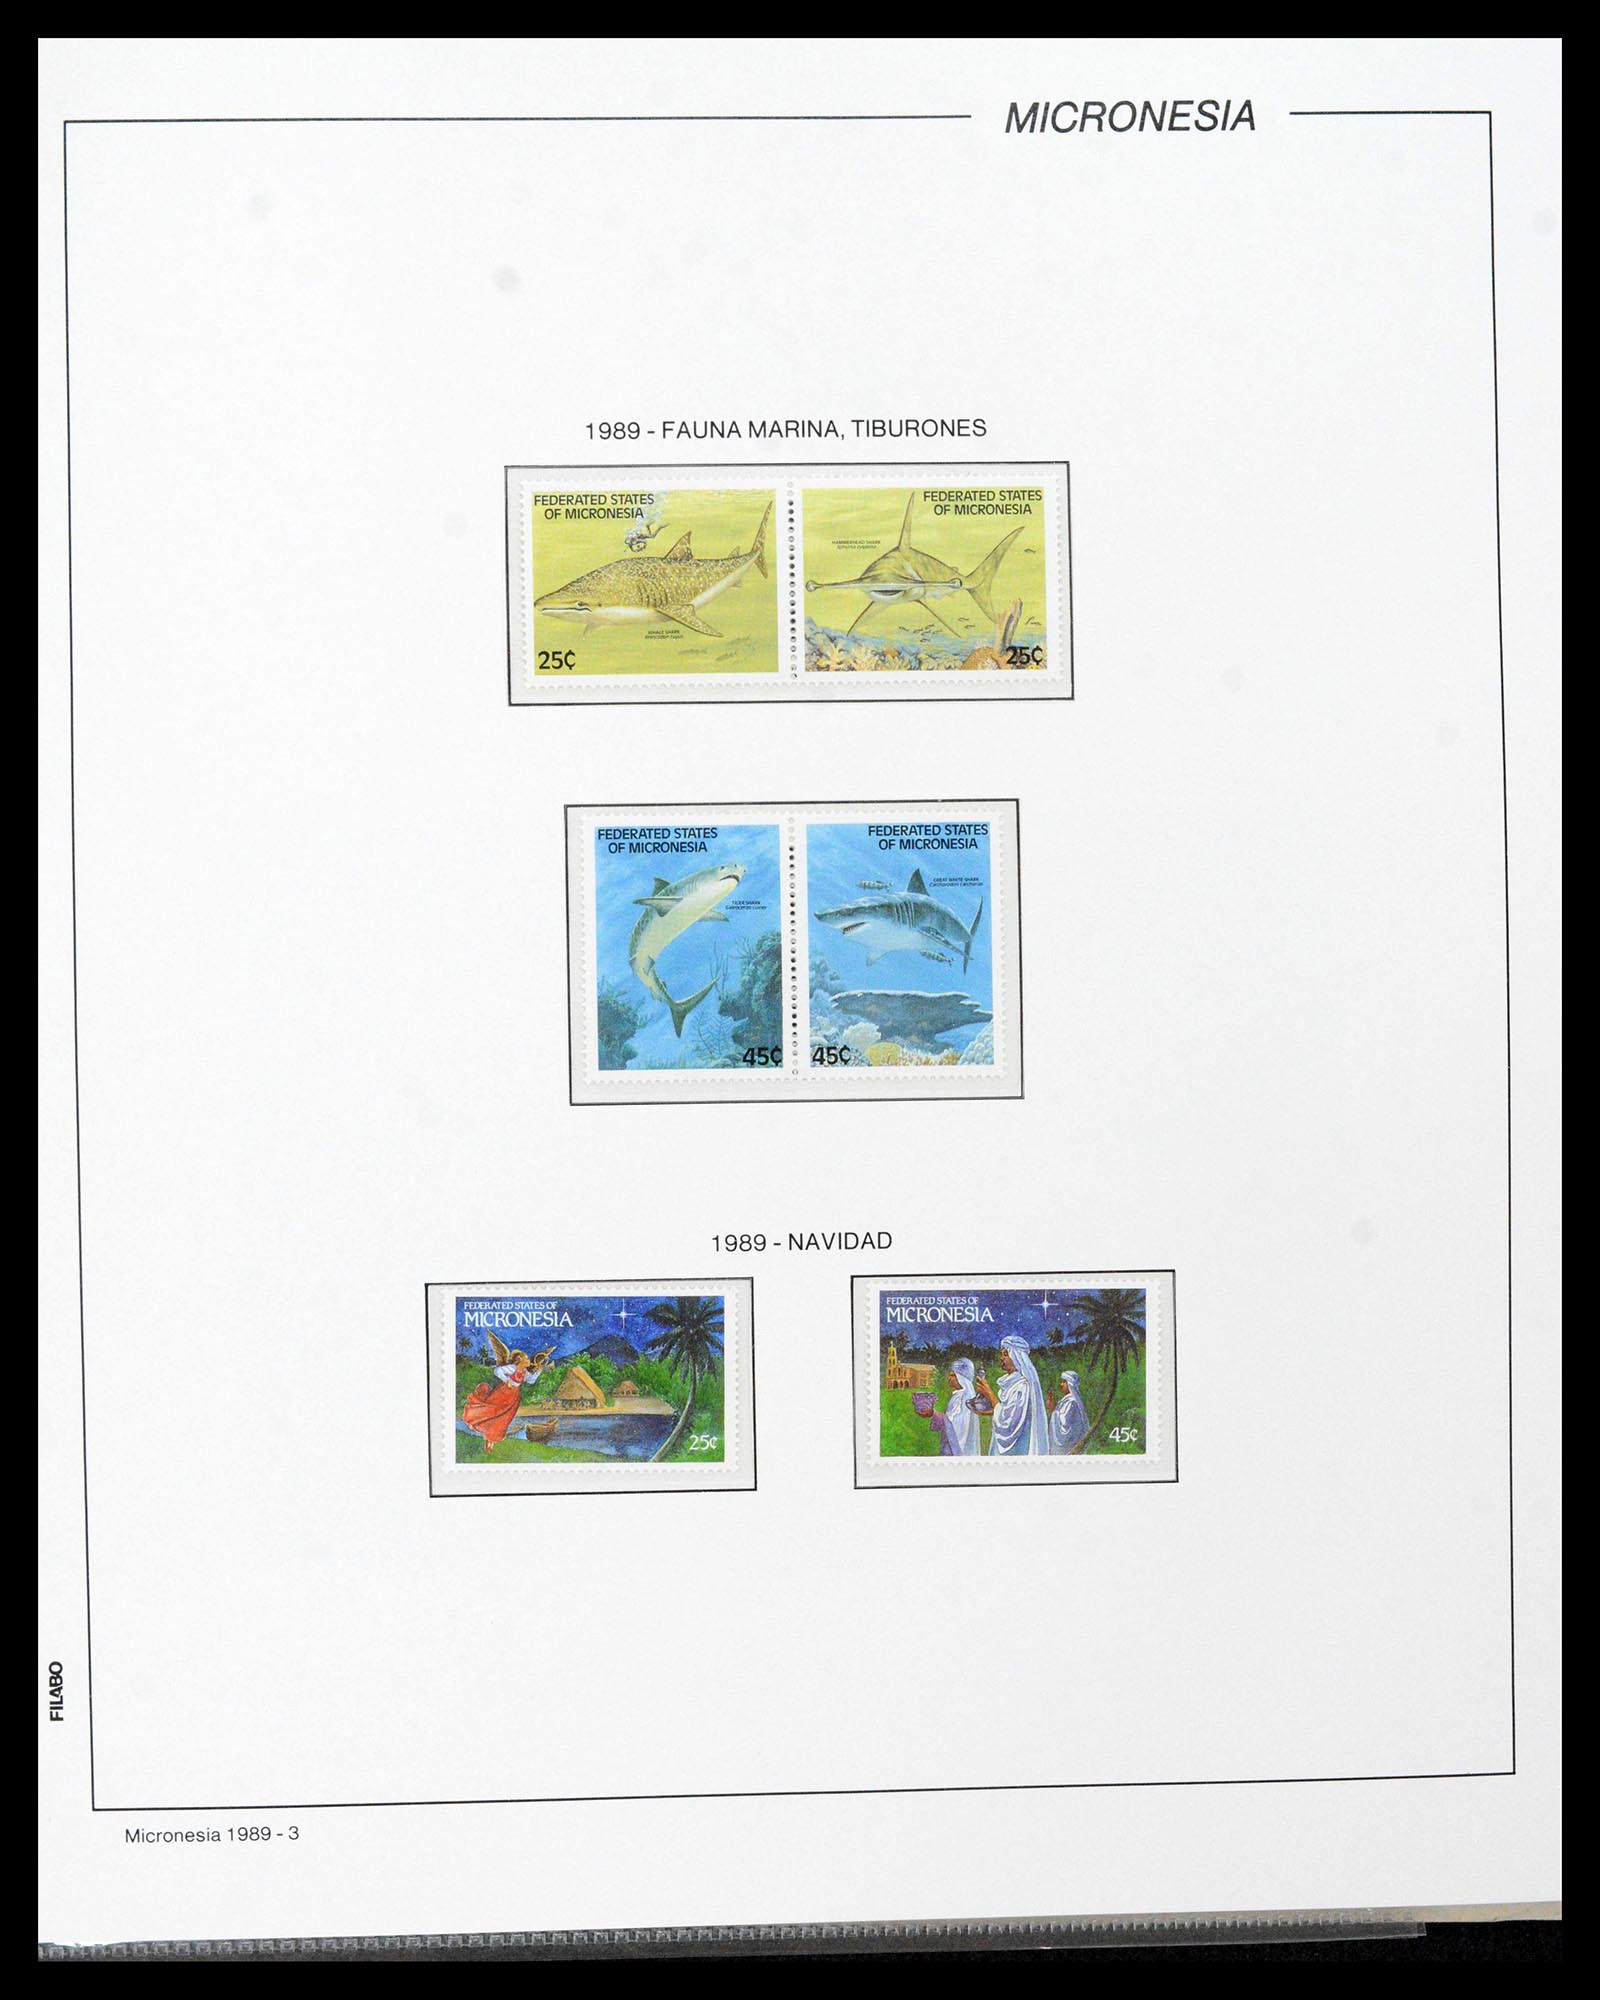 39222 0080 - Stamp collection 39222 Palau, Micronesia and Marshall islands 1980-1995.